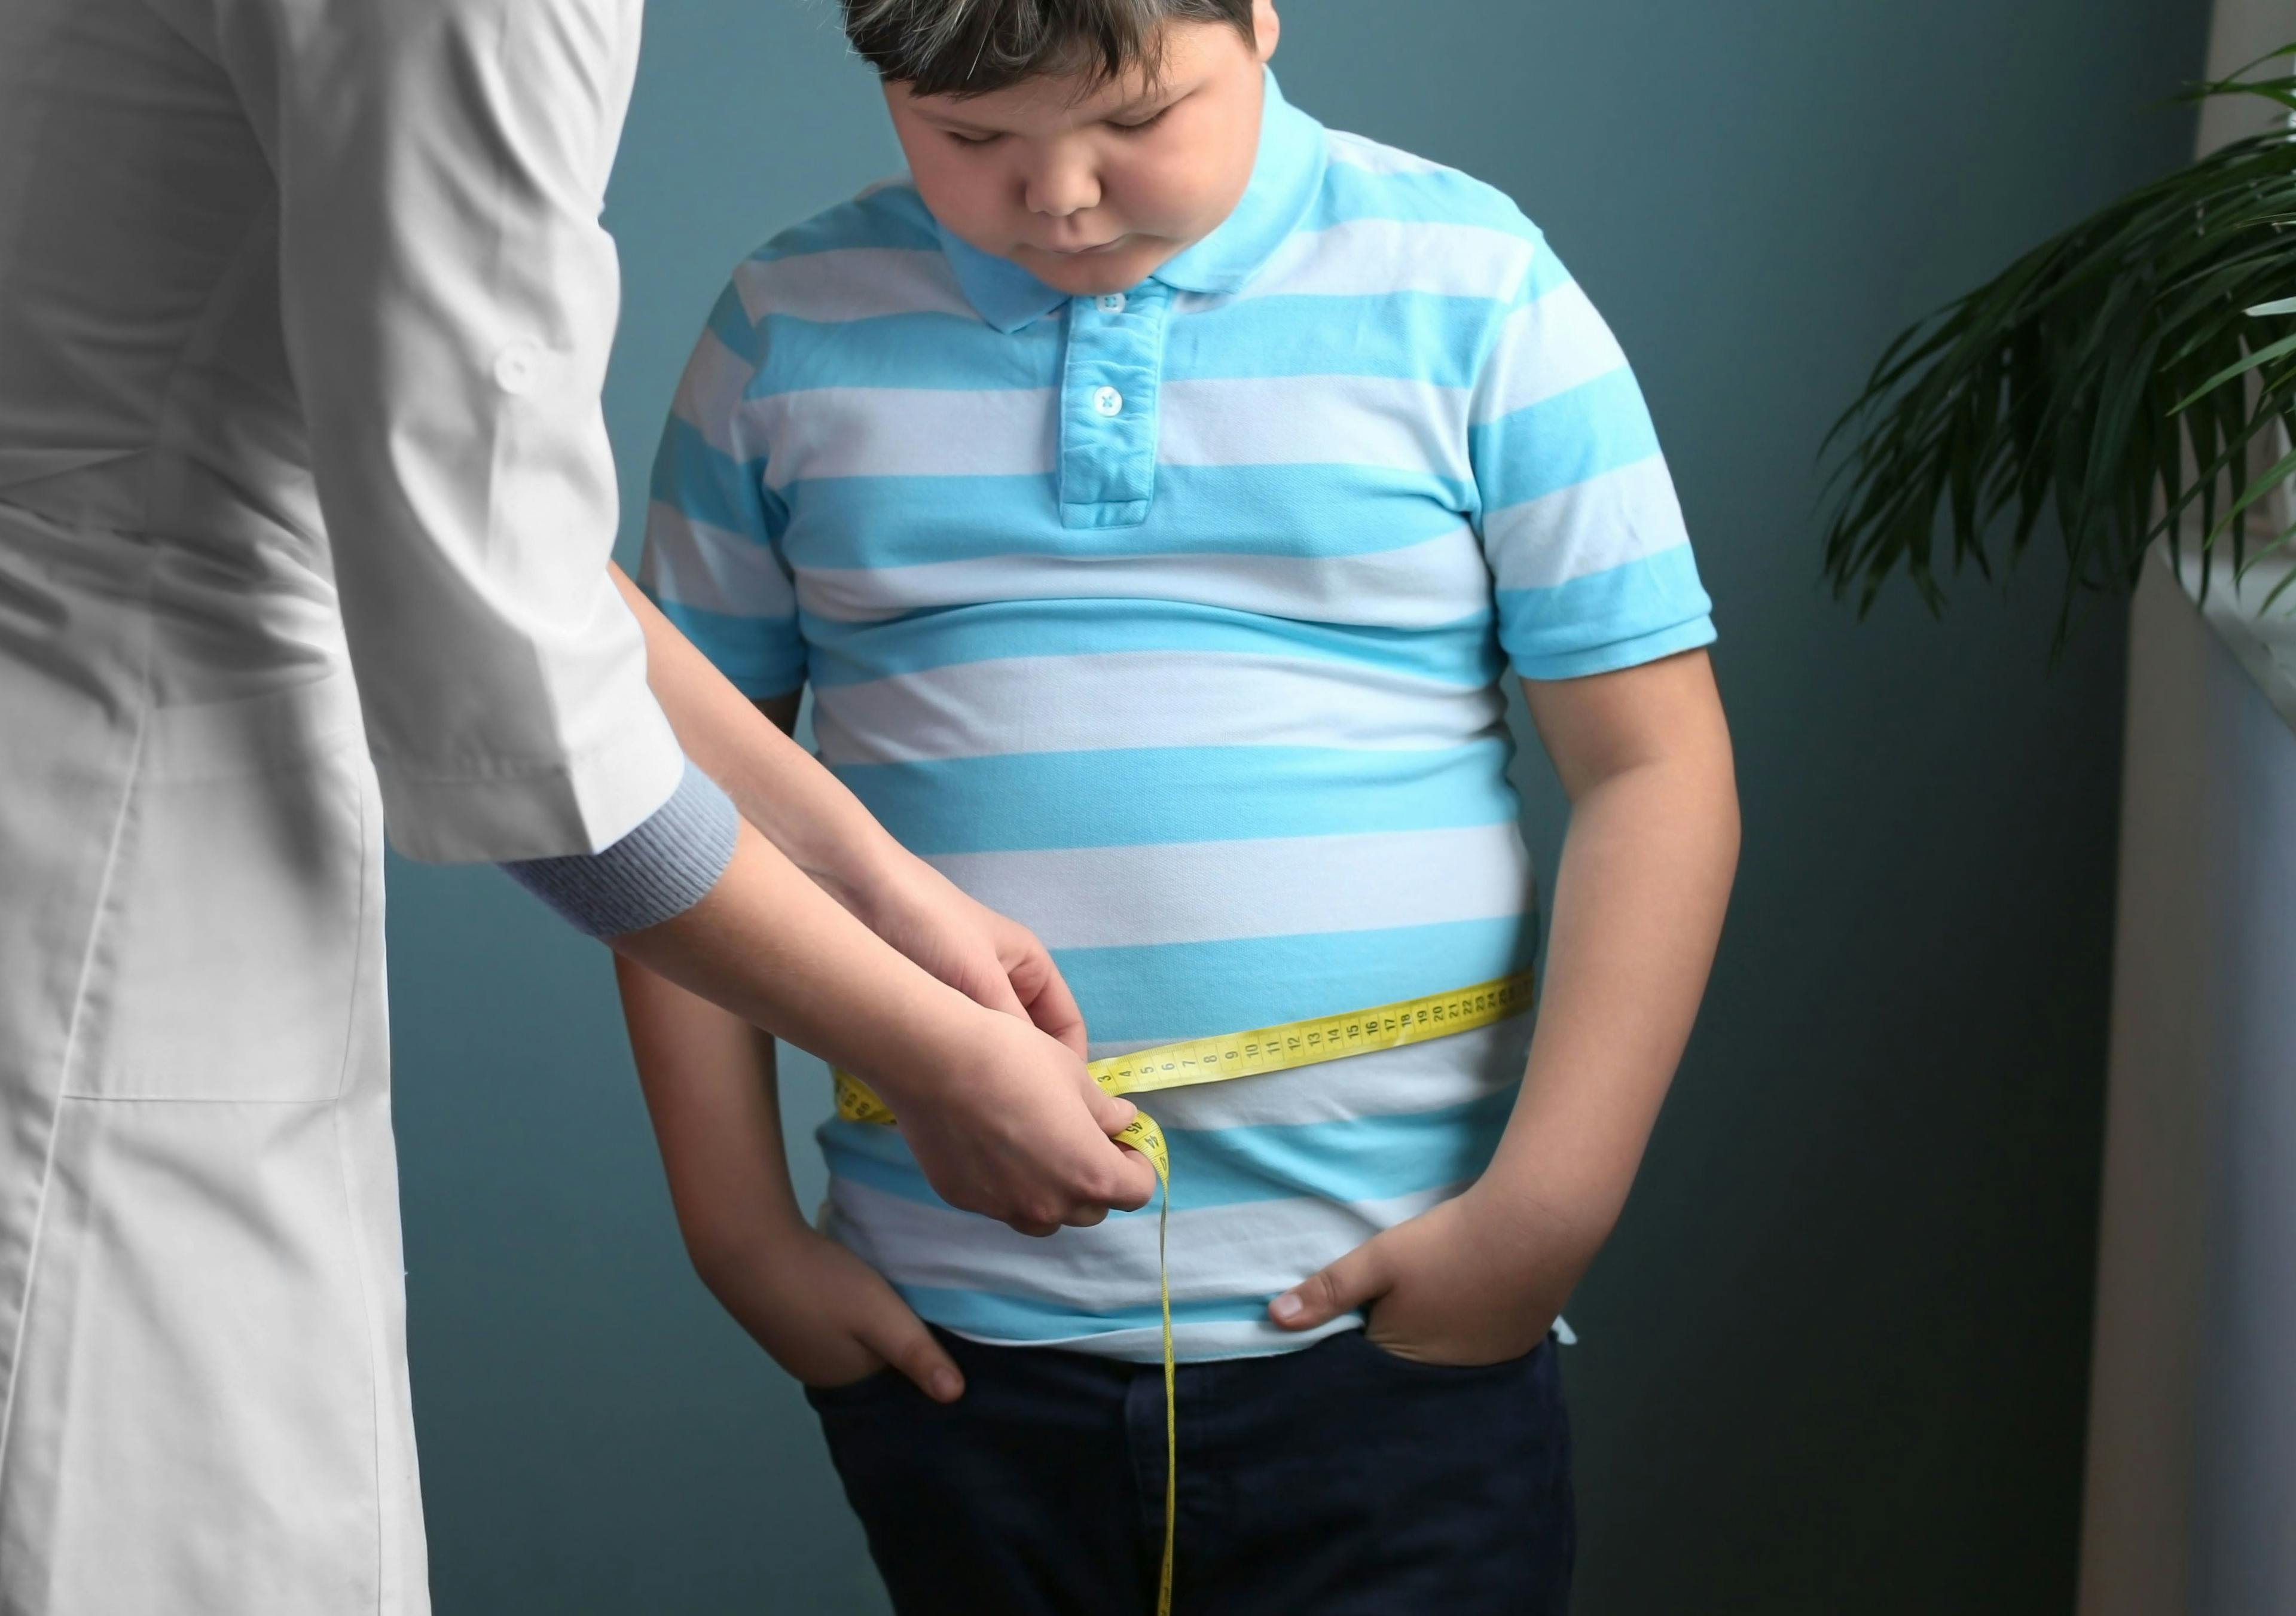 Treating pediatric obesity